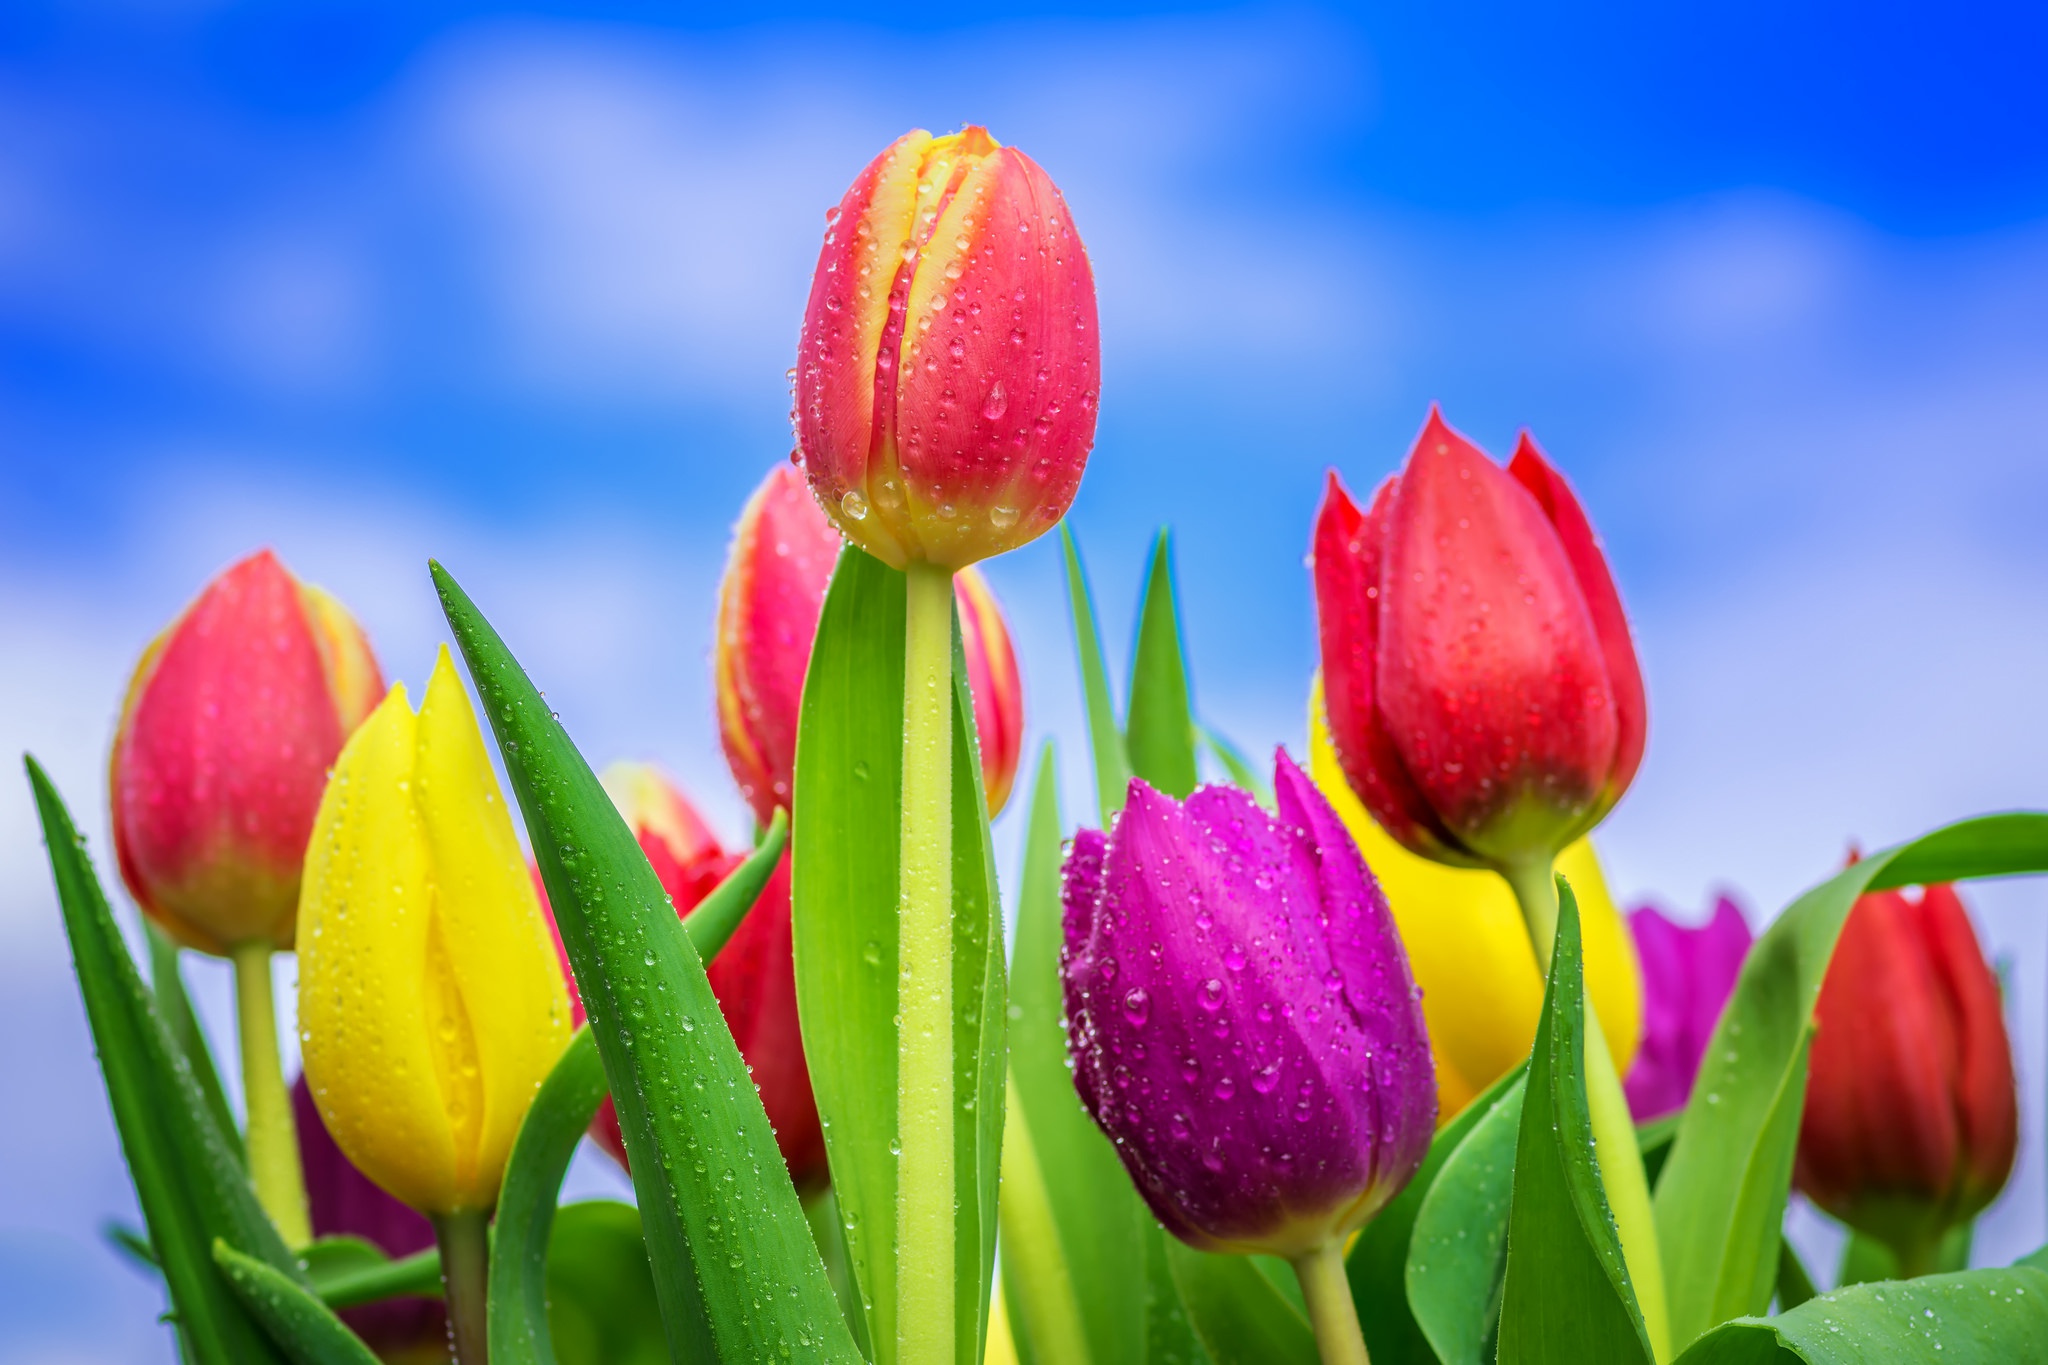 flowers, tulips, colorful, spring flowers, buds, blue background, sky, water drops, цветы, тюльпаны, разноцветные, весенние цветы, бутоны, голубой фон, небо, капли воды